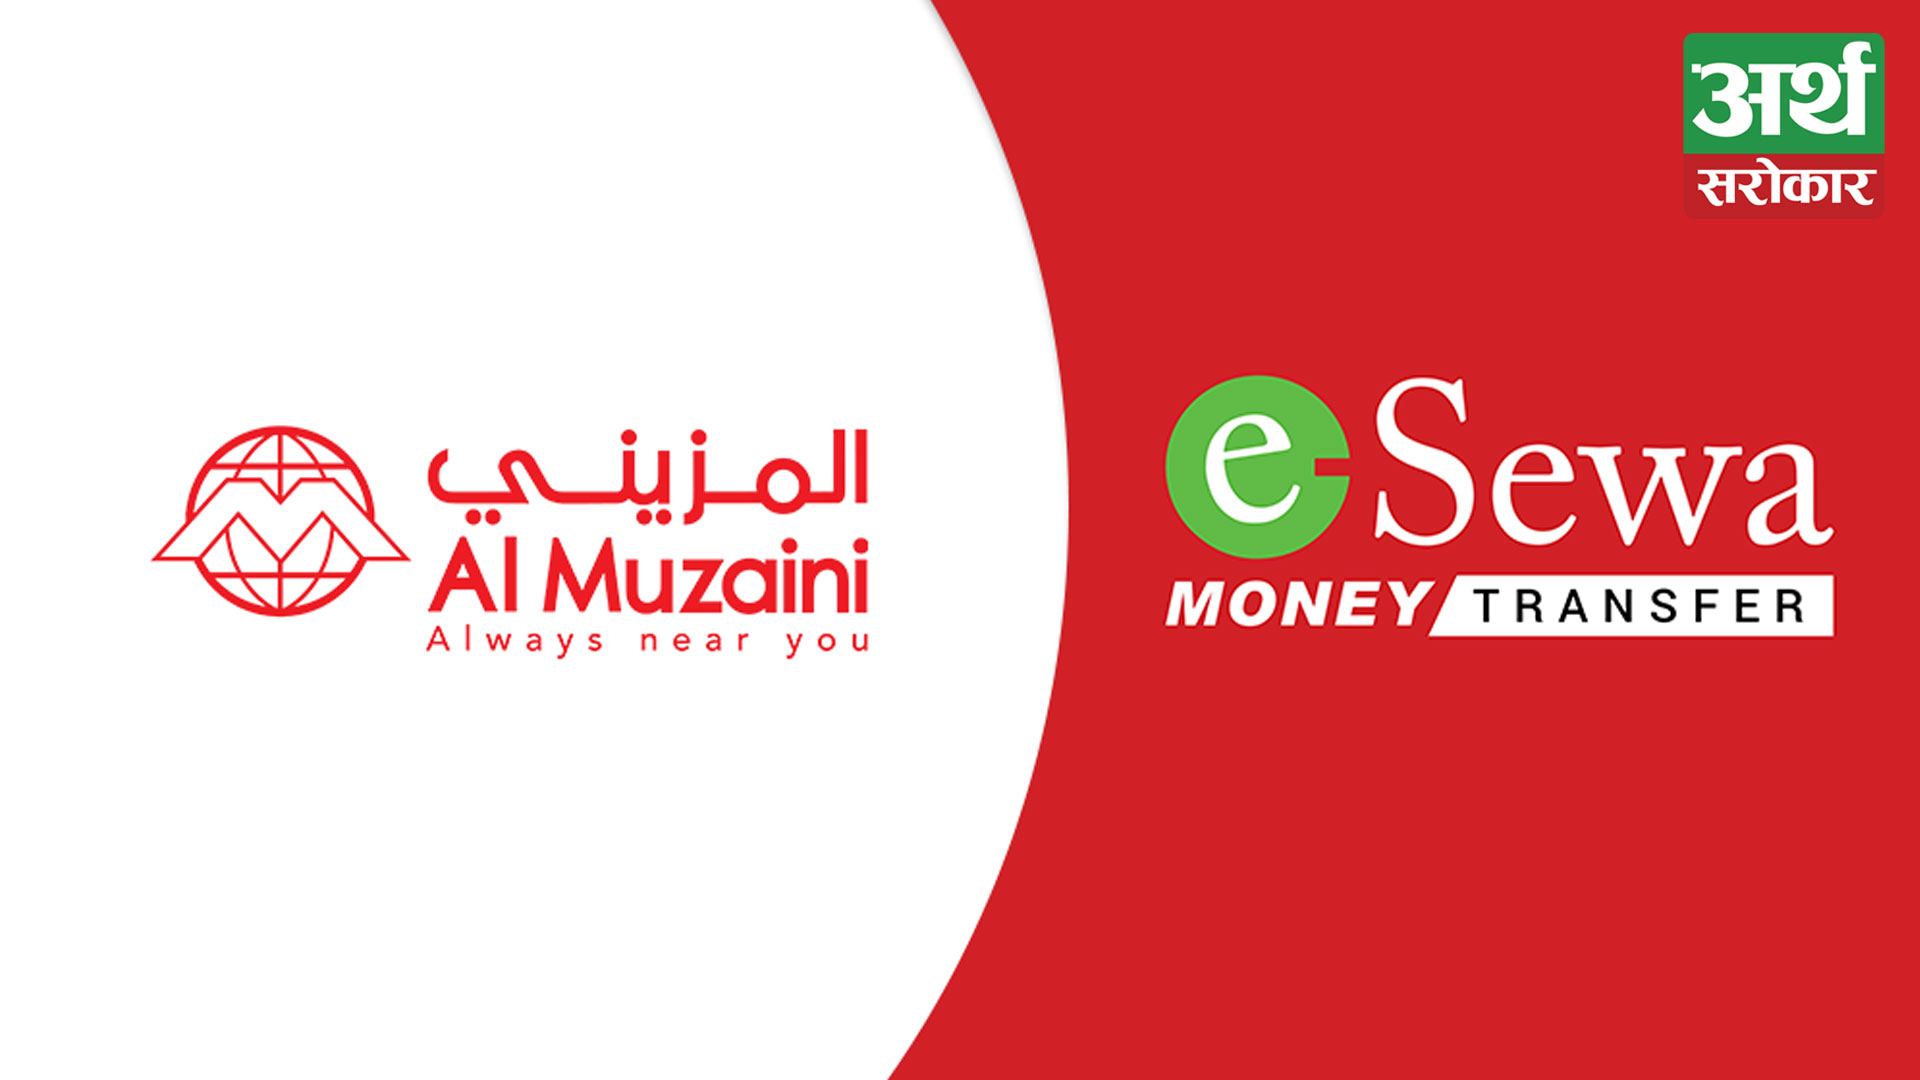 Esewa Money Transfer partners with Kuwait-based Al Muzaini Exchange